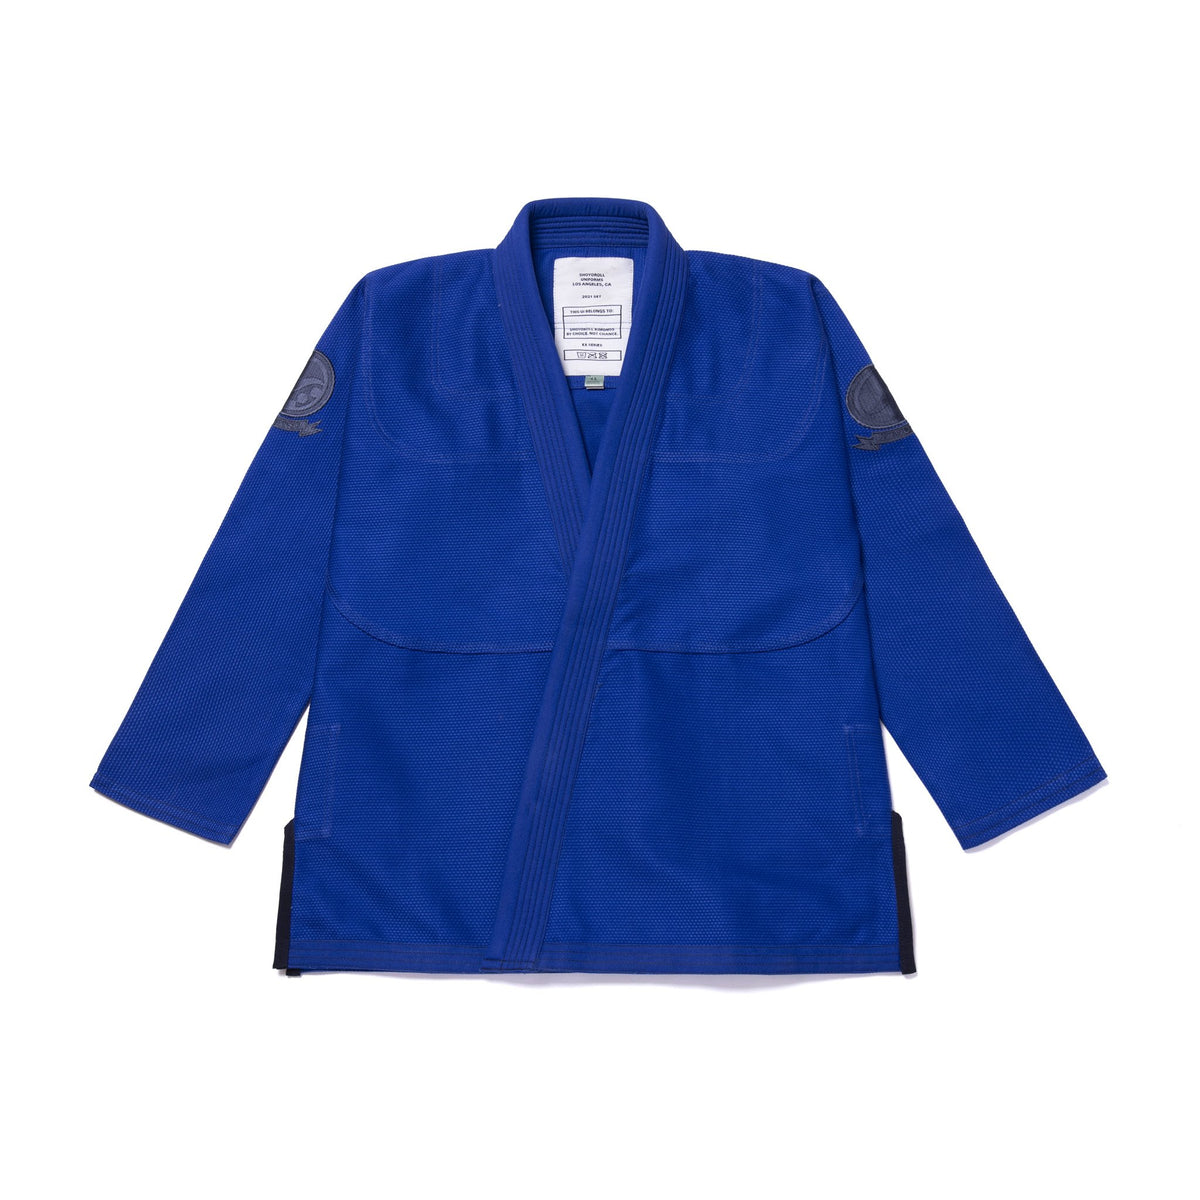 Shoyoroll Monochrome Kimono • Blue • 1/A1 • BRAND NEW – BJJ Gi Seller